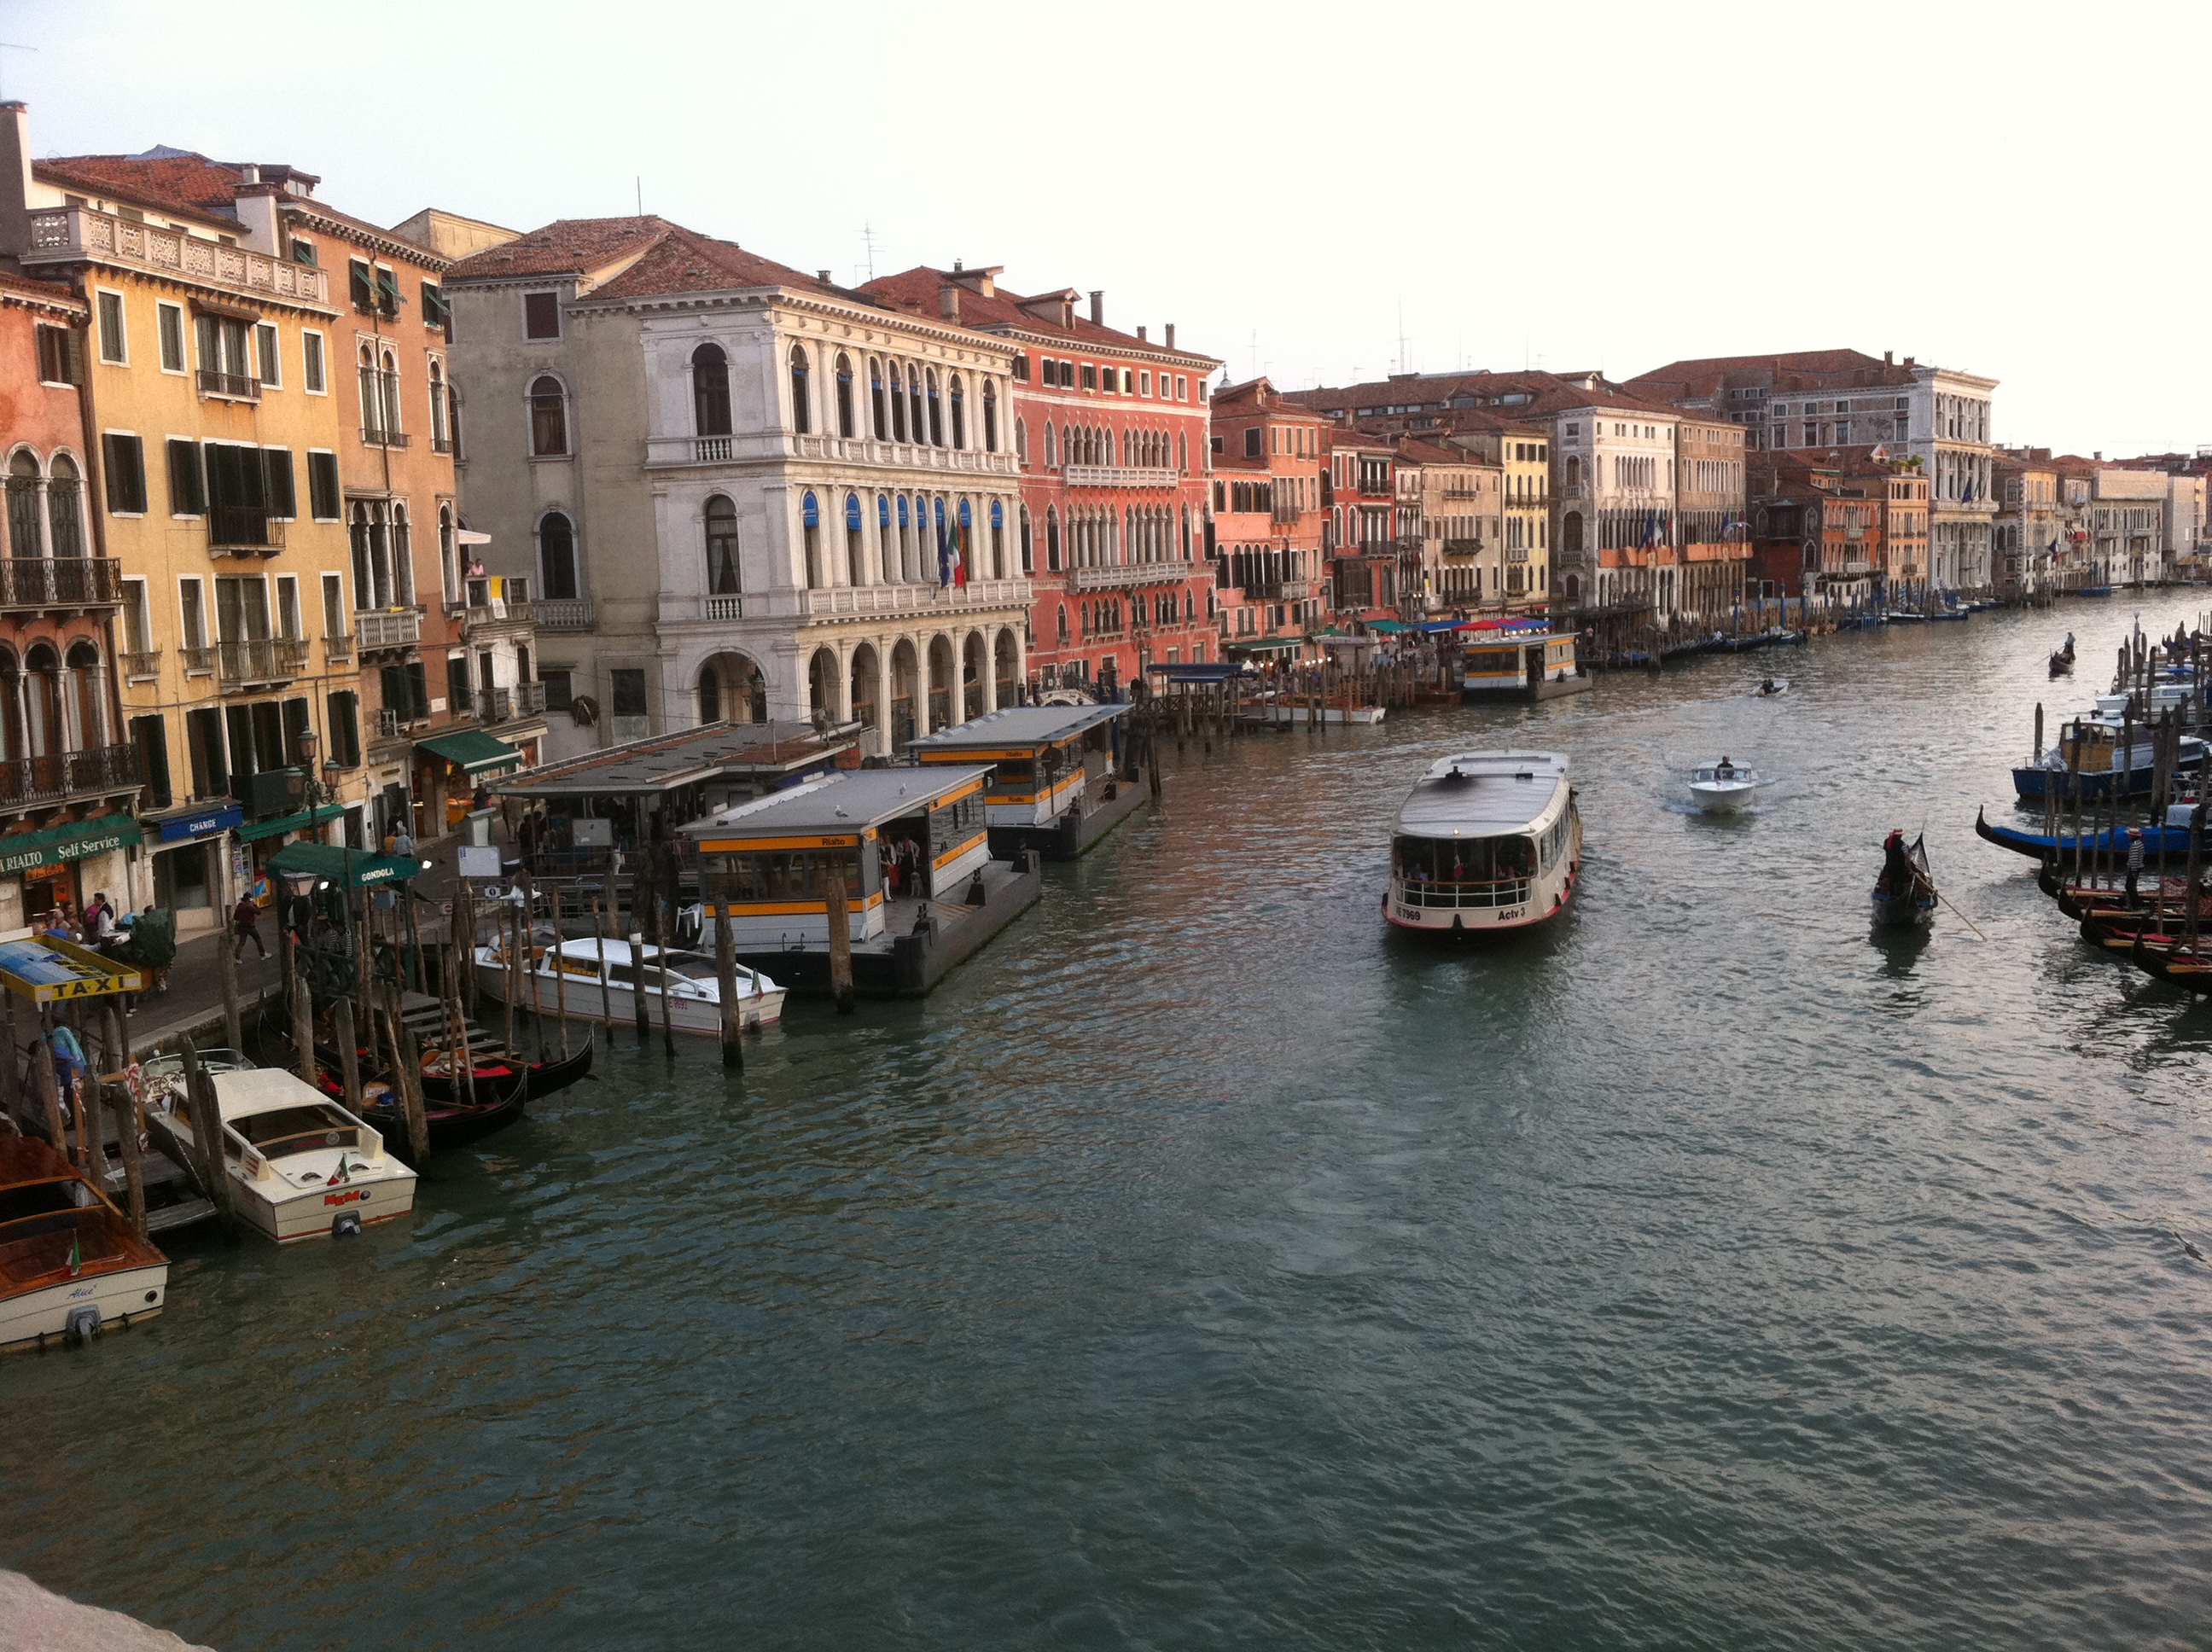 View from the Rialto in Venice